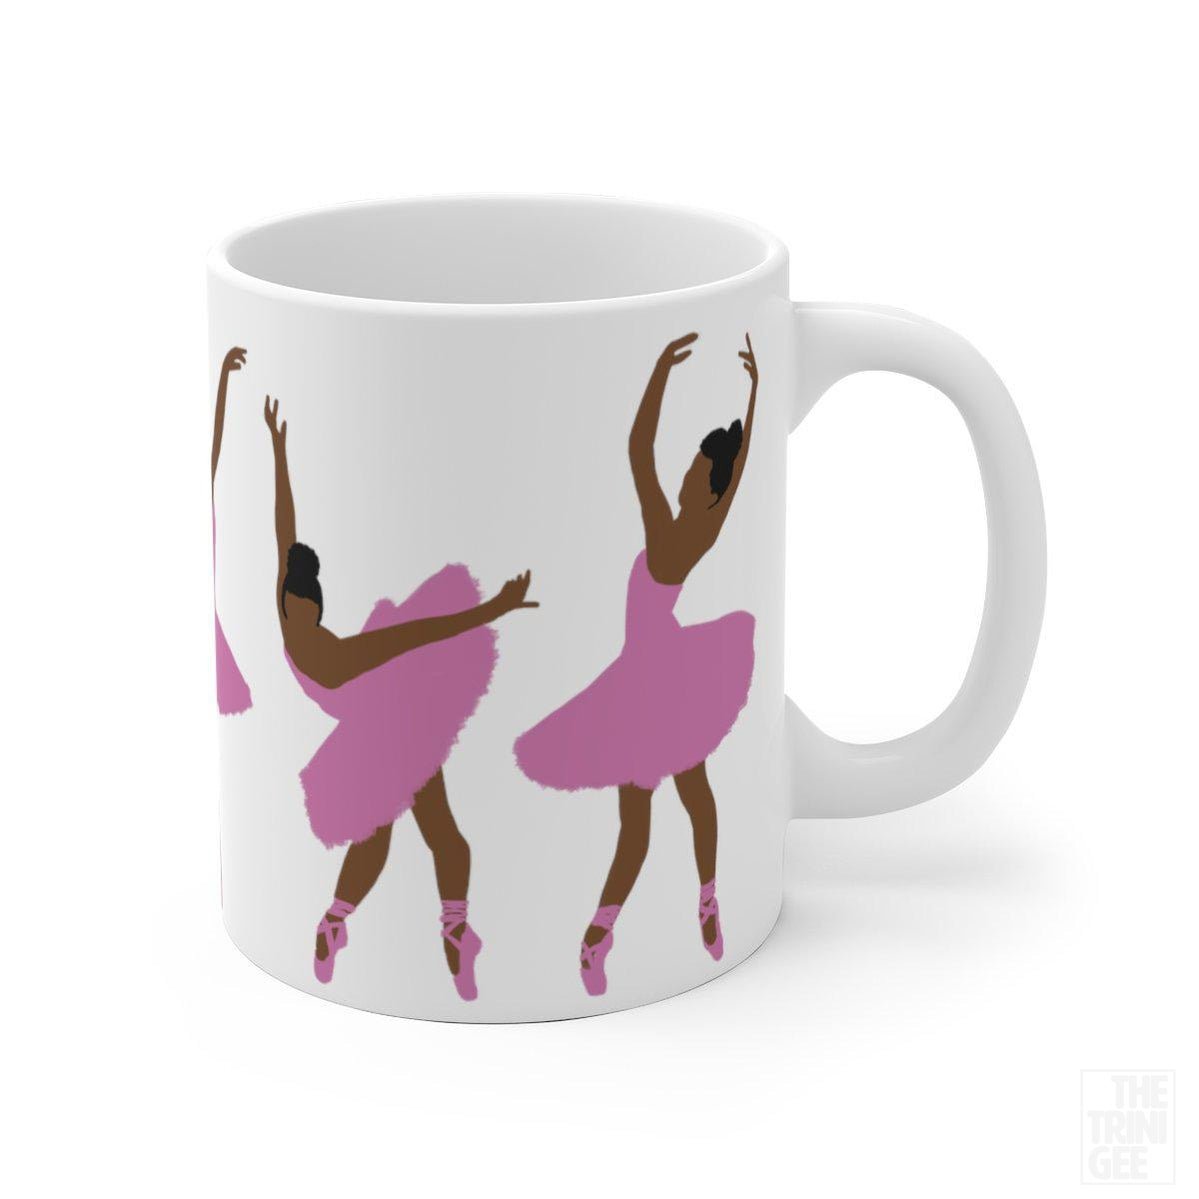 Pink Ballerina Mug - The Trini Gee